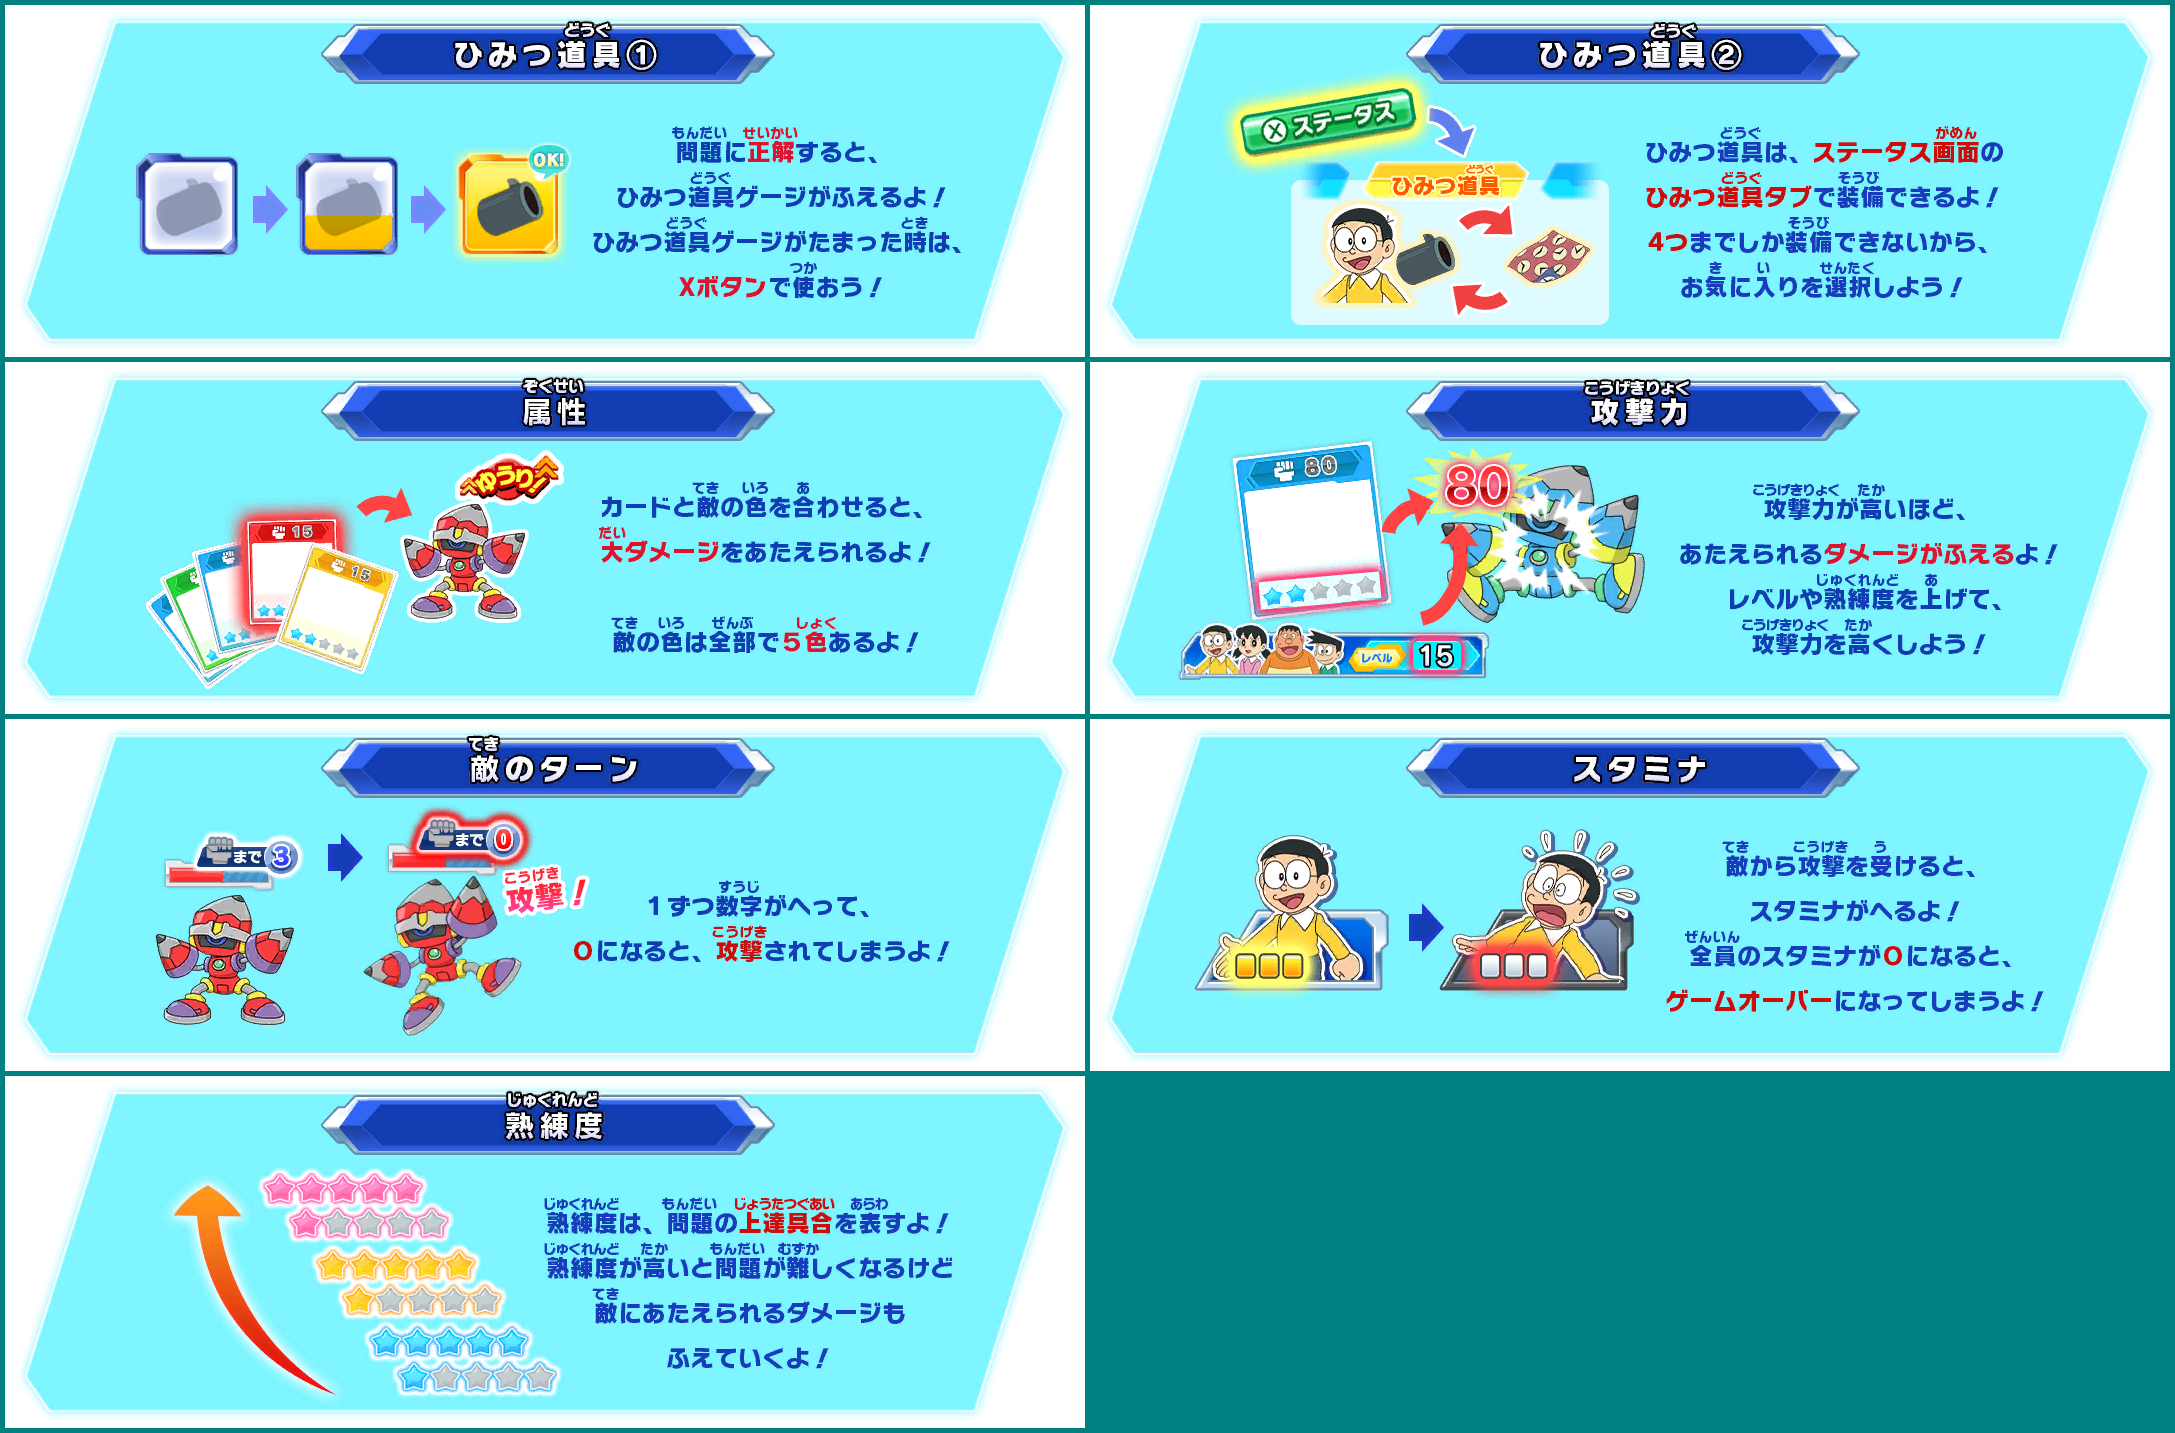 Doraemon: Nobita's Brain Exercise Adventure - Pause Menu Instructions (Japanese)